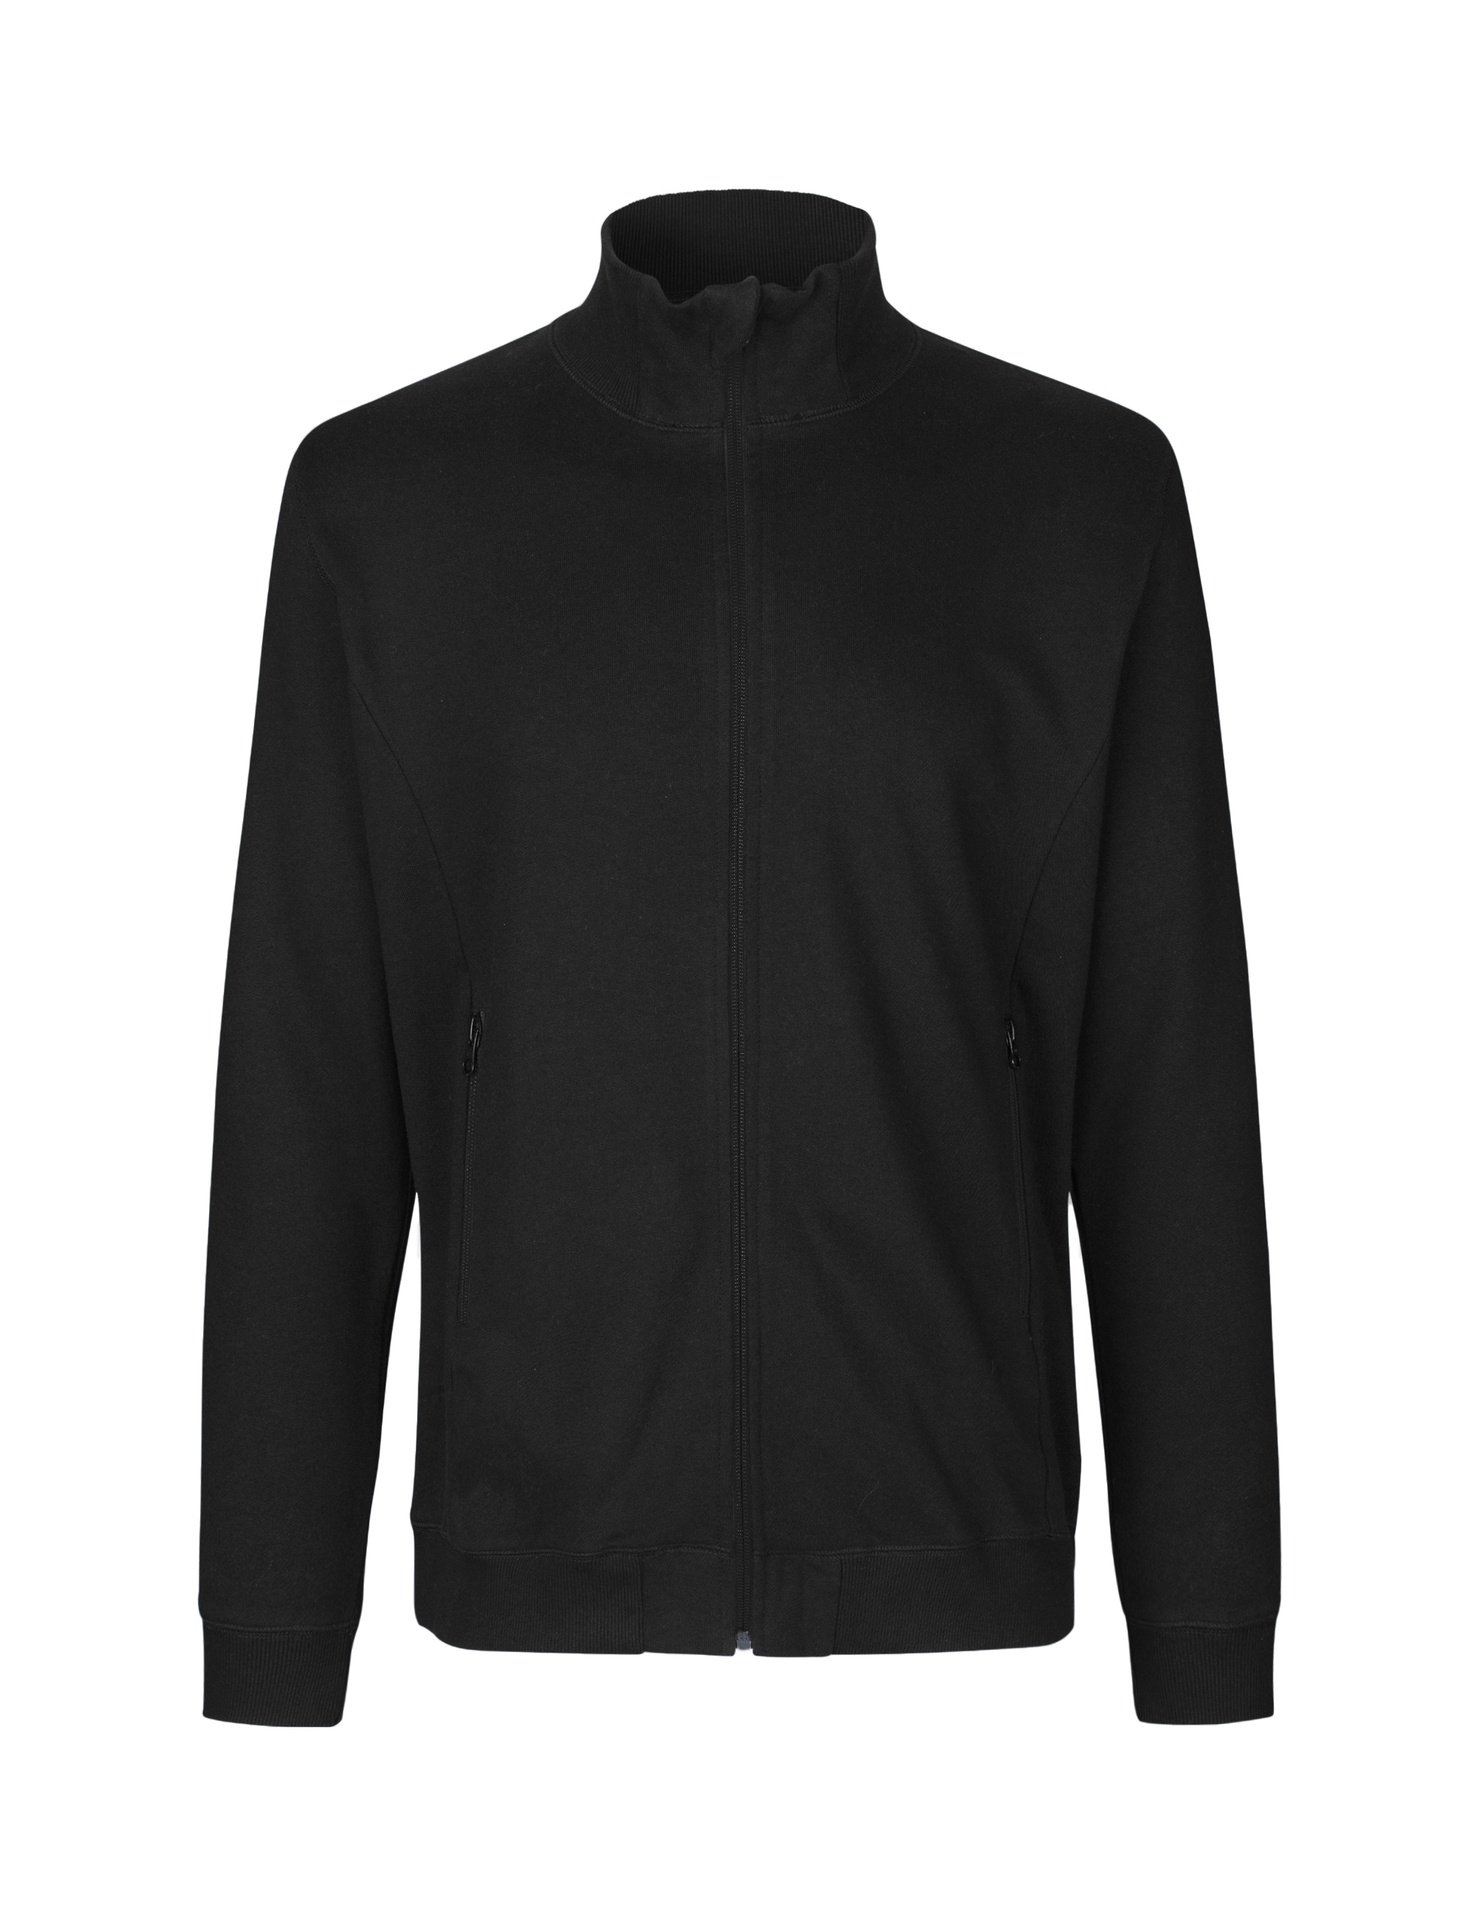 [PR/03632] Unisex High Neck Jacket (Black 03, L)